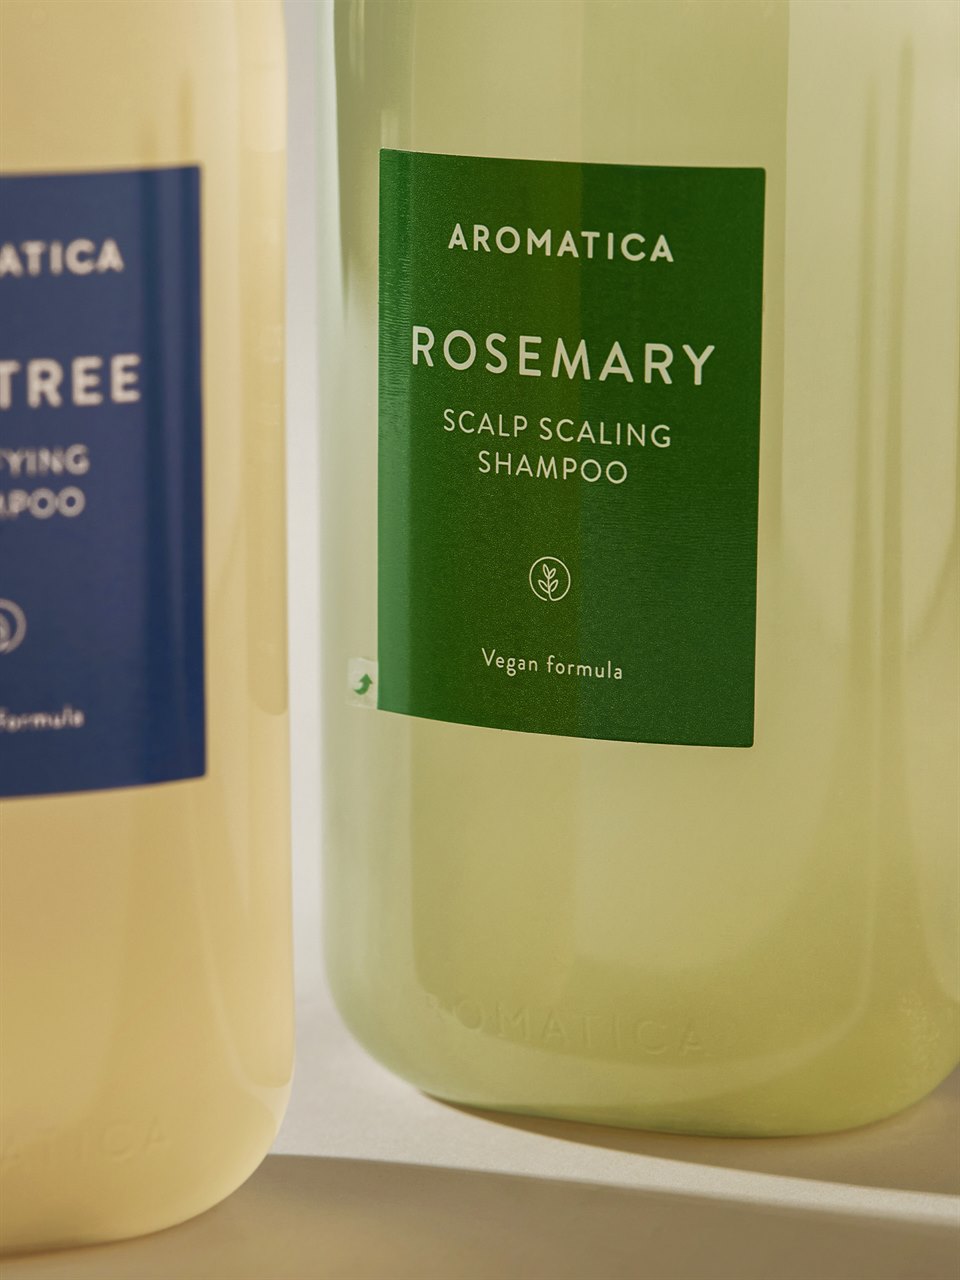 aromatica rosemary scalp scaling shampoo vegan formula